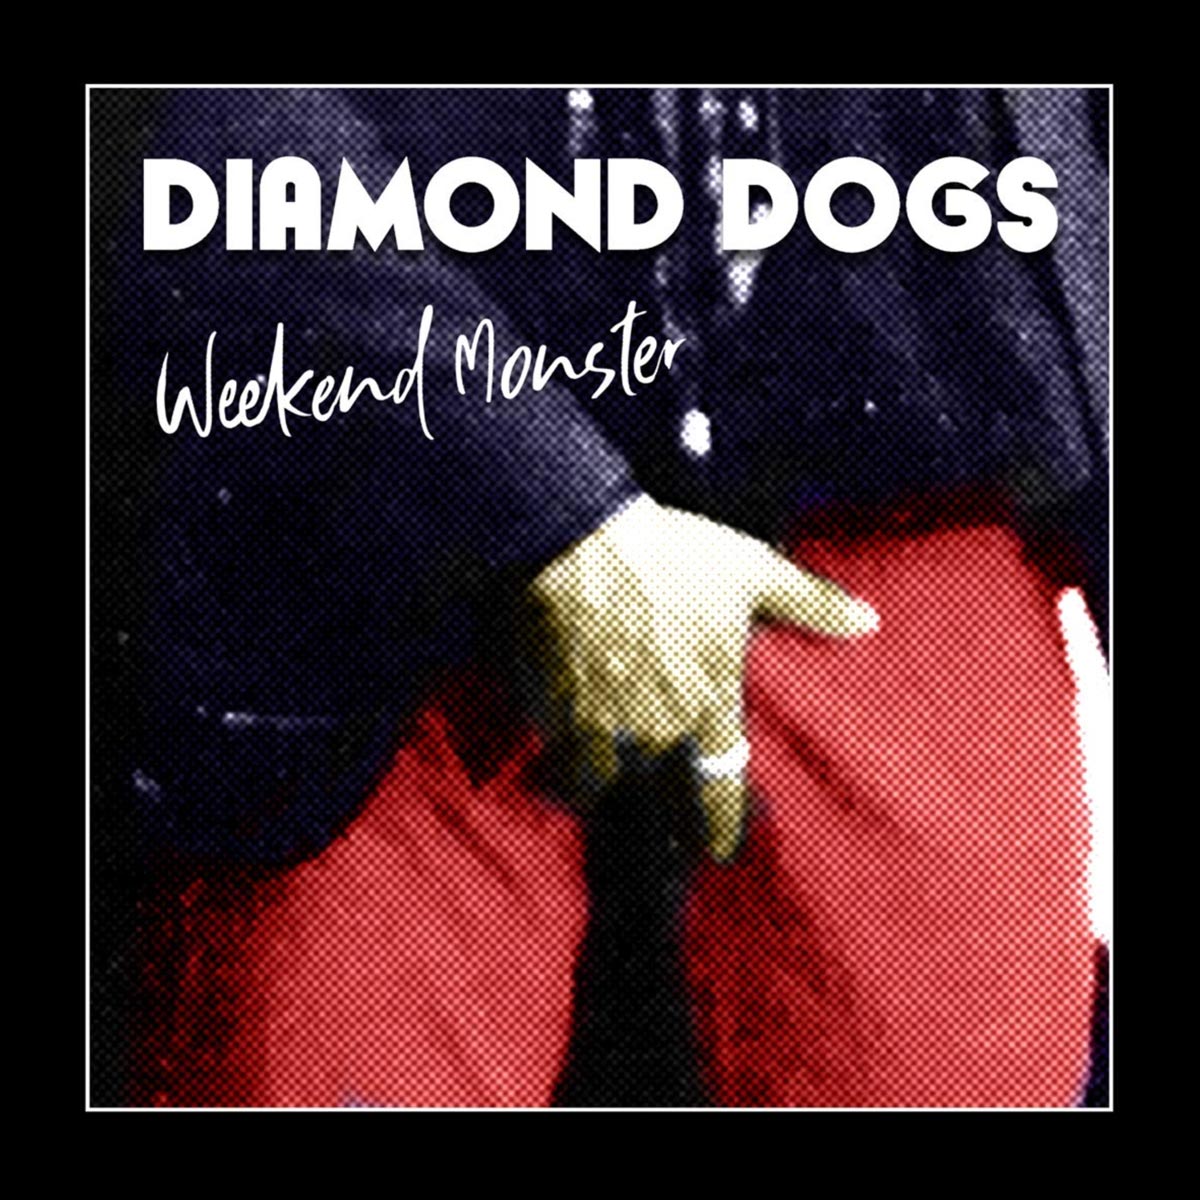 iamond-Dogs---Weekend-Monster-(Green-Vinyl)---LP